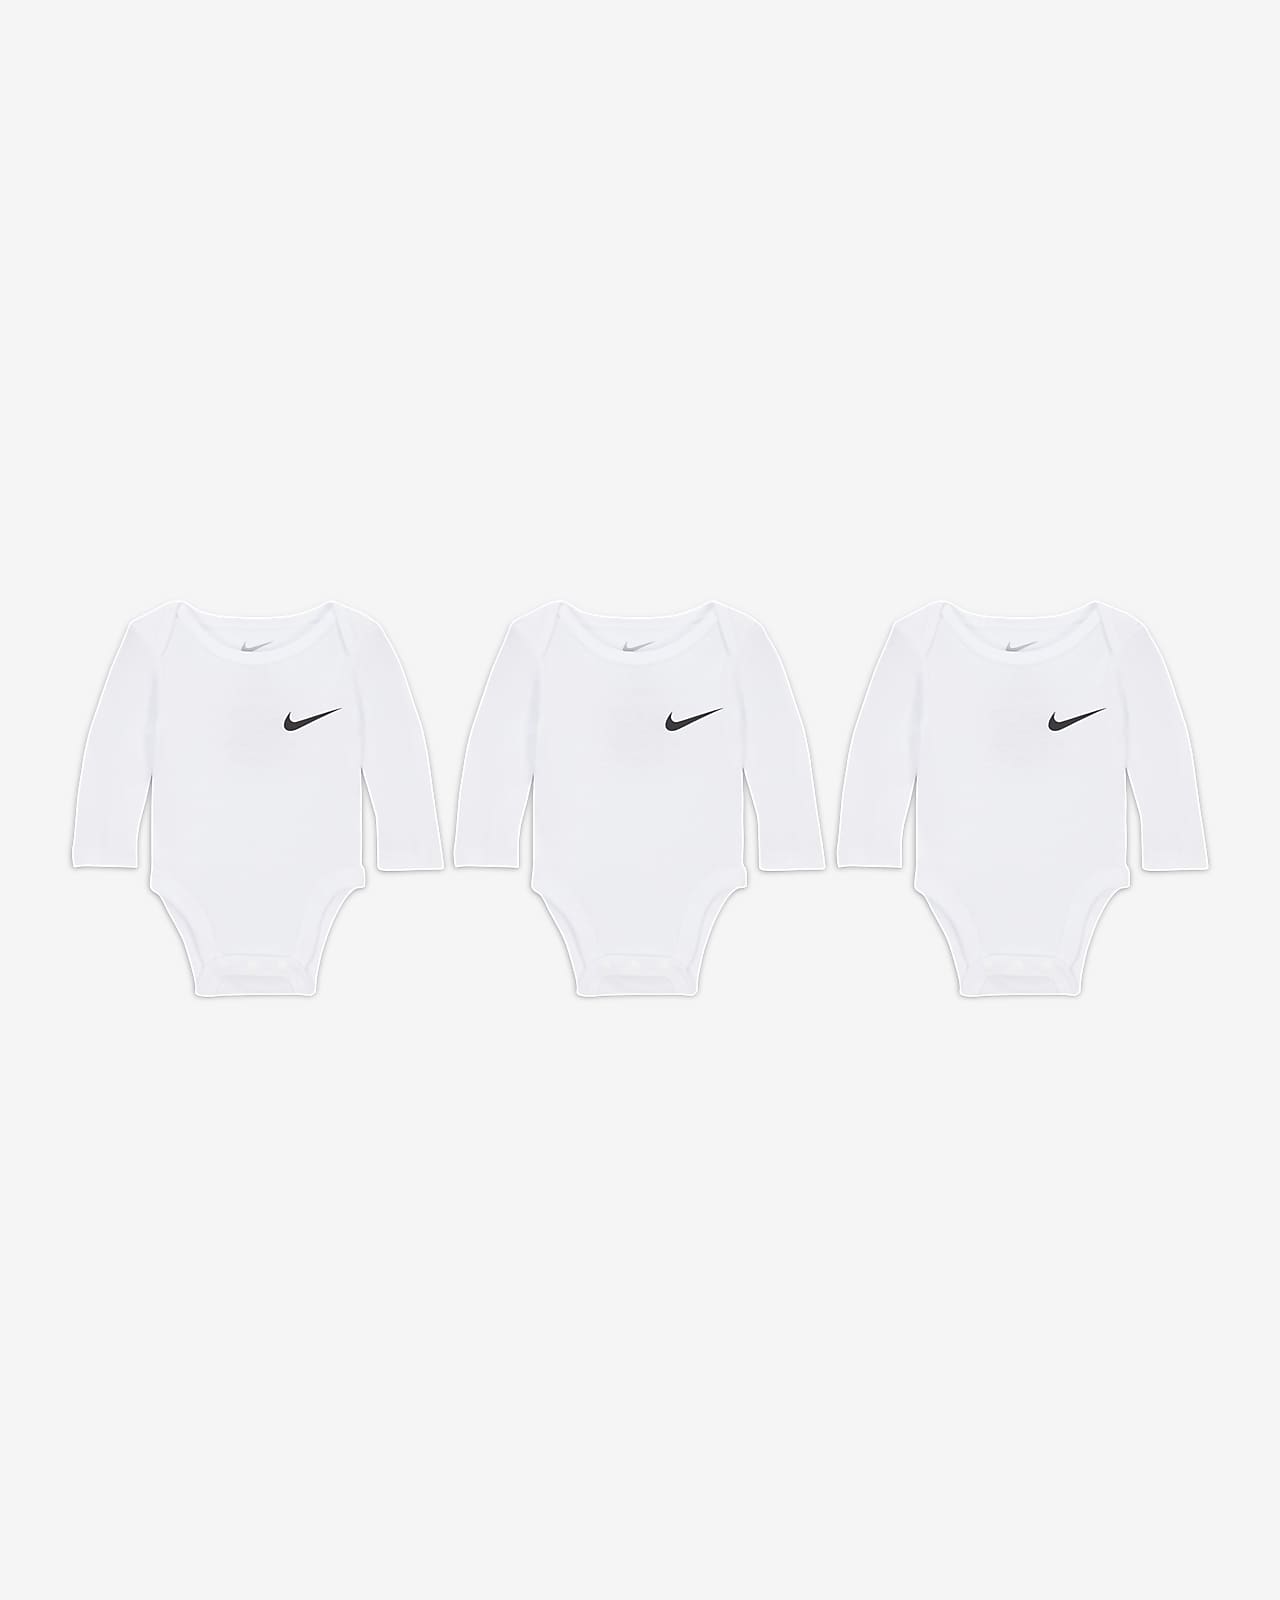 Nike Essentials 3-Pack Long Sleeve Bodysuits Baby Bodysuit Pack.